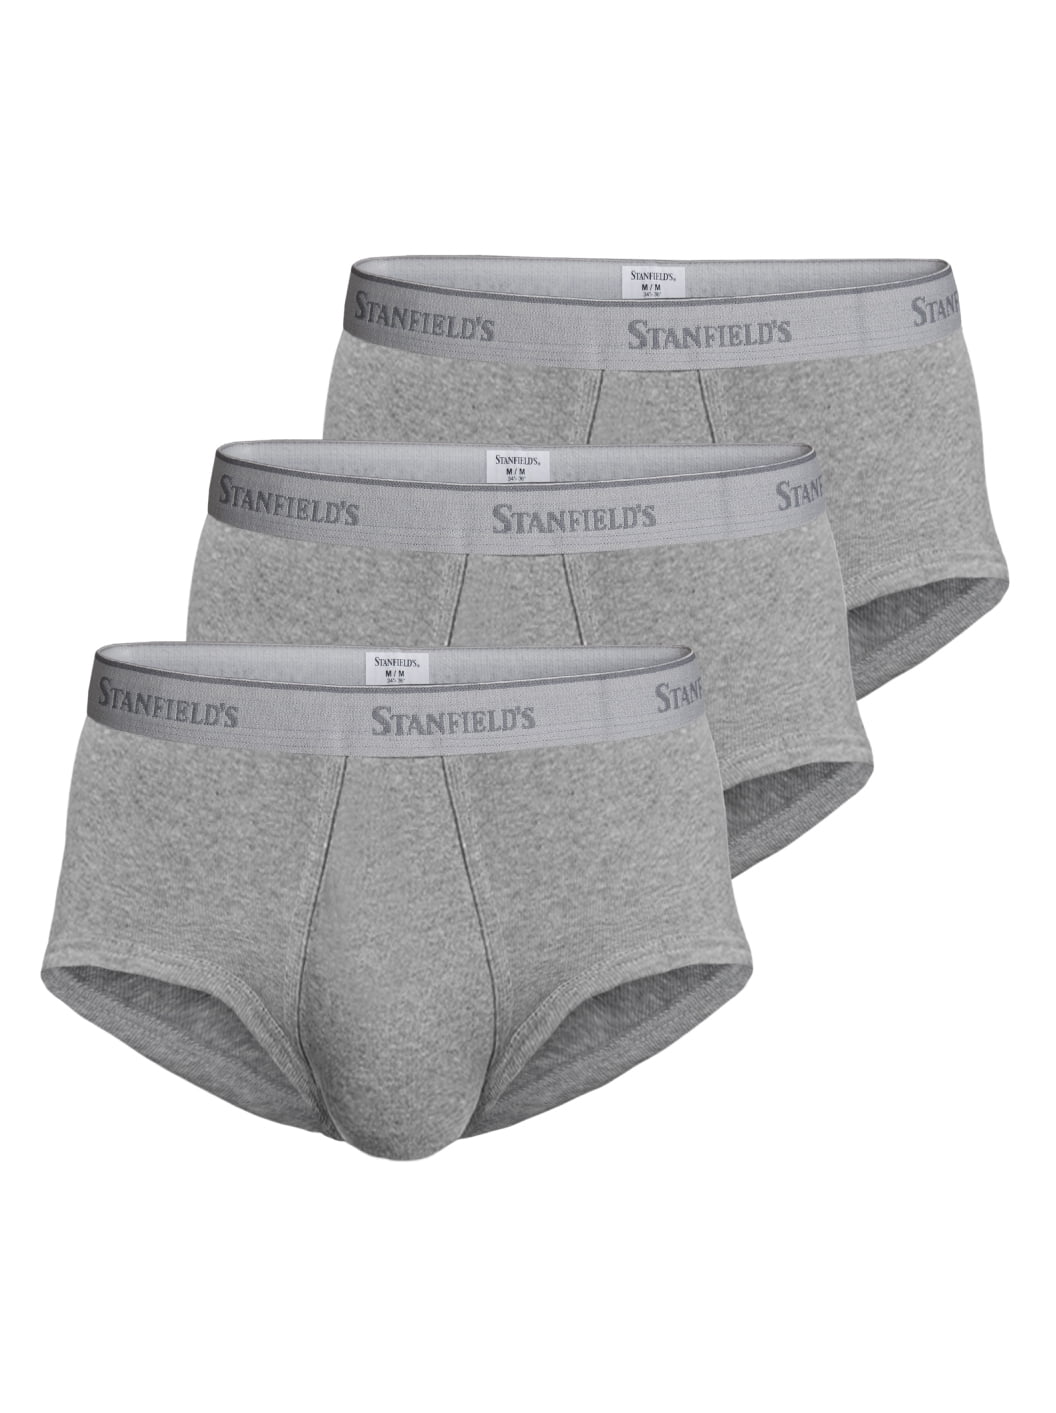 Vintage Stanfield's Briefs Underwear Classic Grey Adult Size Large 38 40 